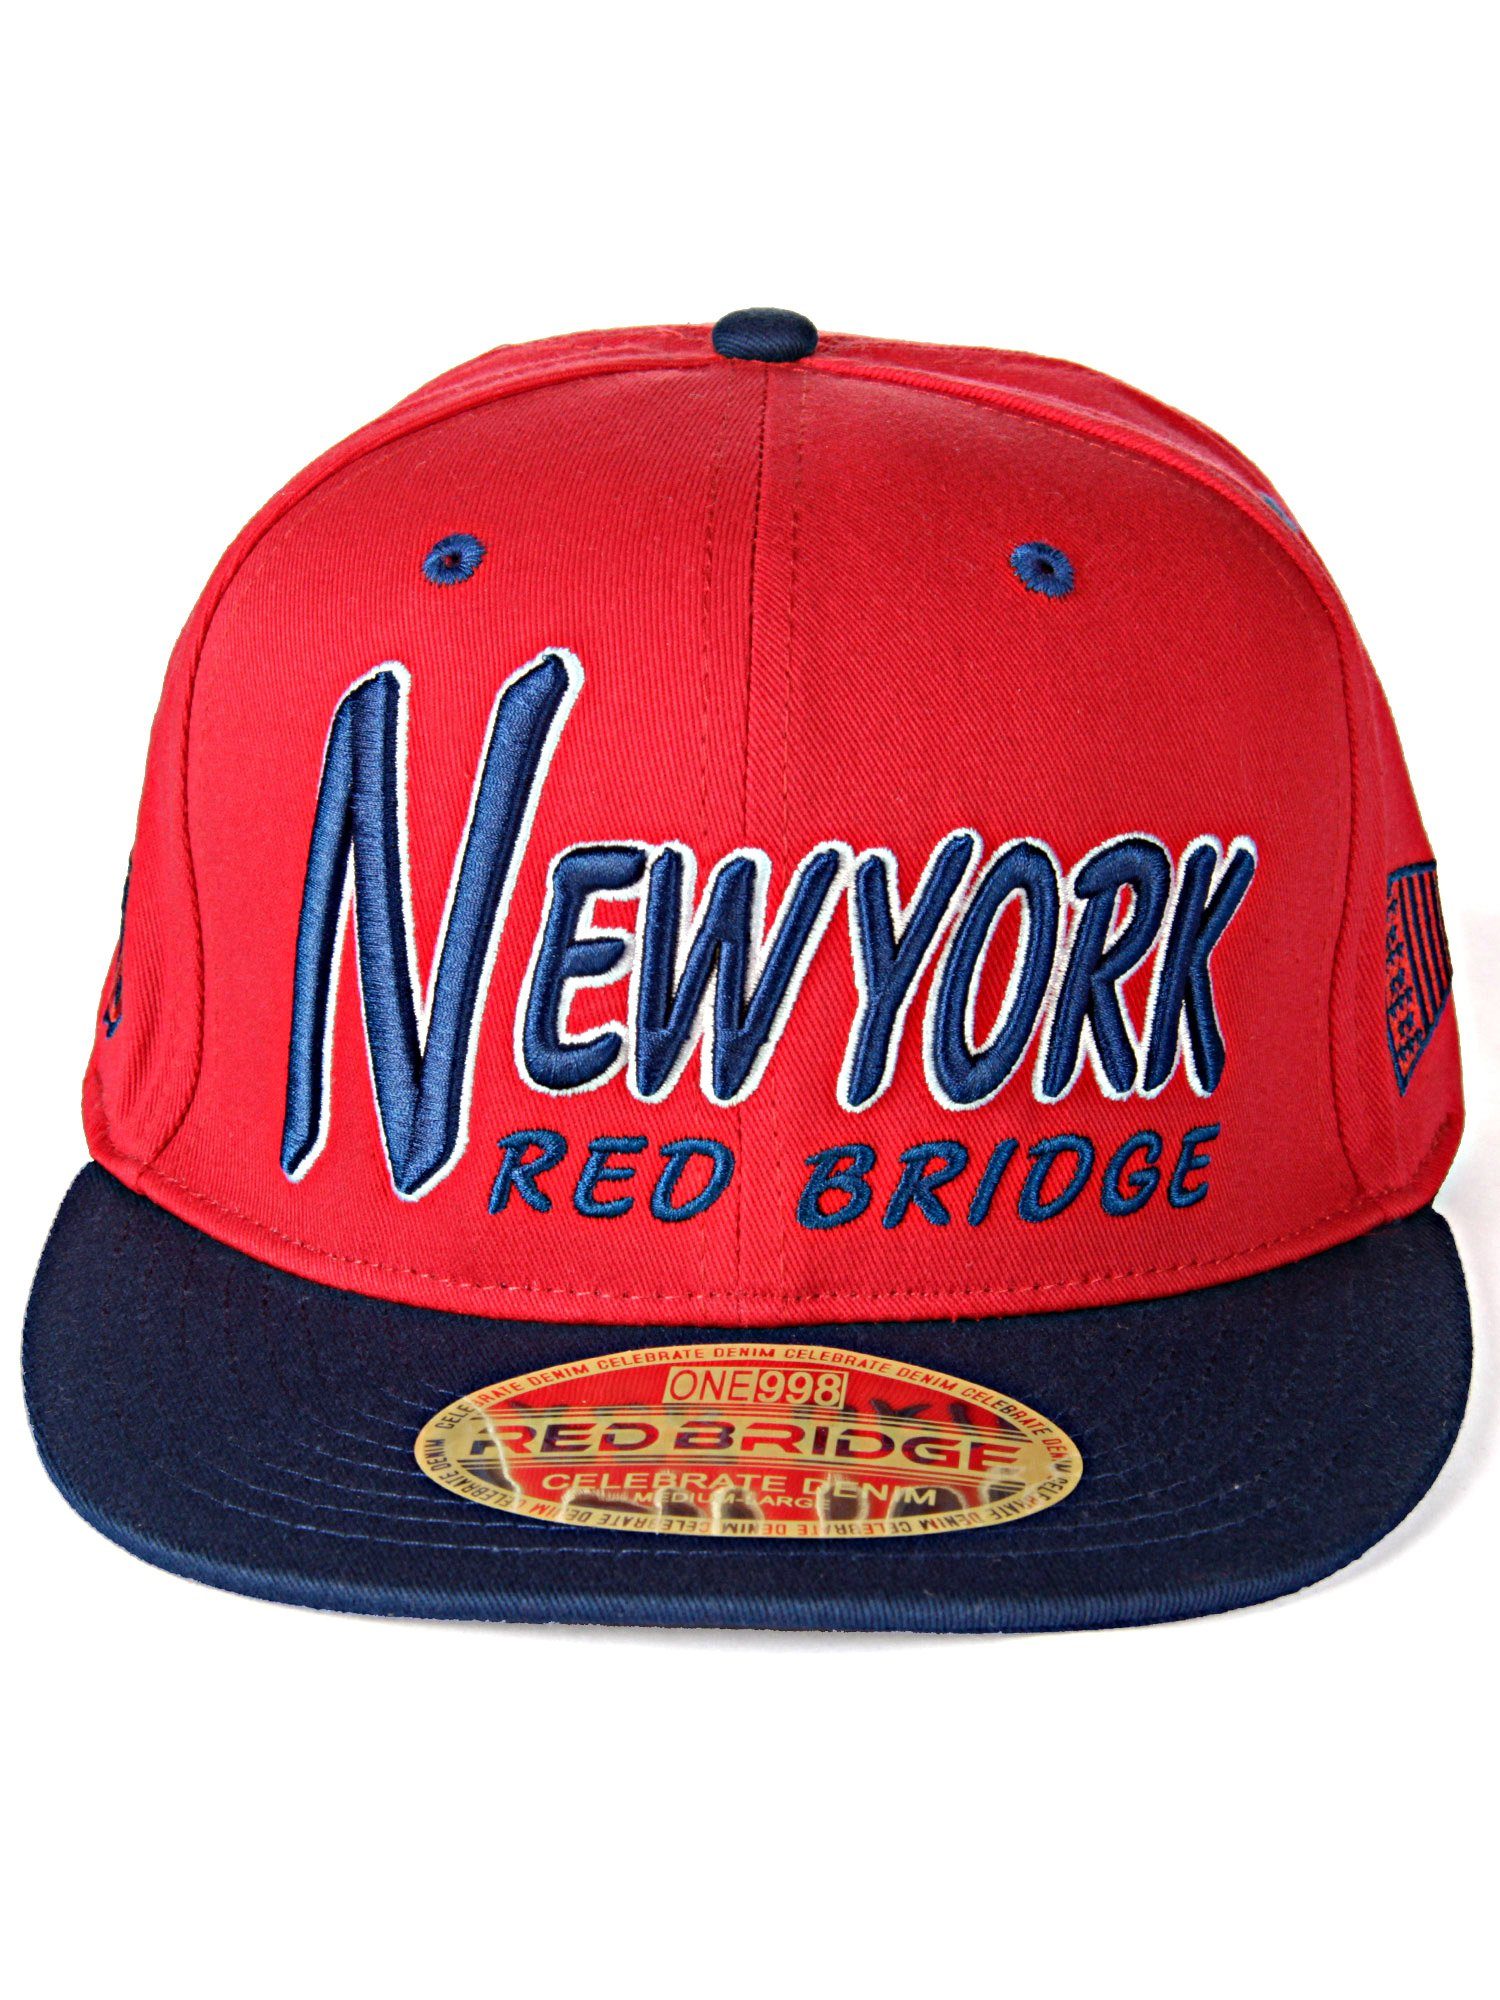 Angebotspreis RedBridge Baseball kontrastfarbigem mit dunkelblau-rot Schirm Bootle Cap